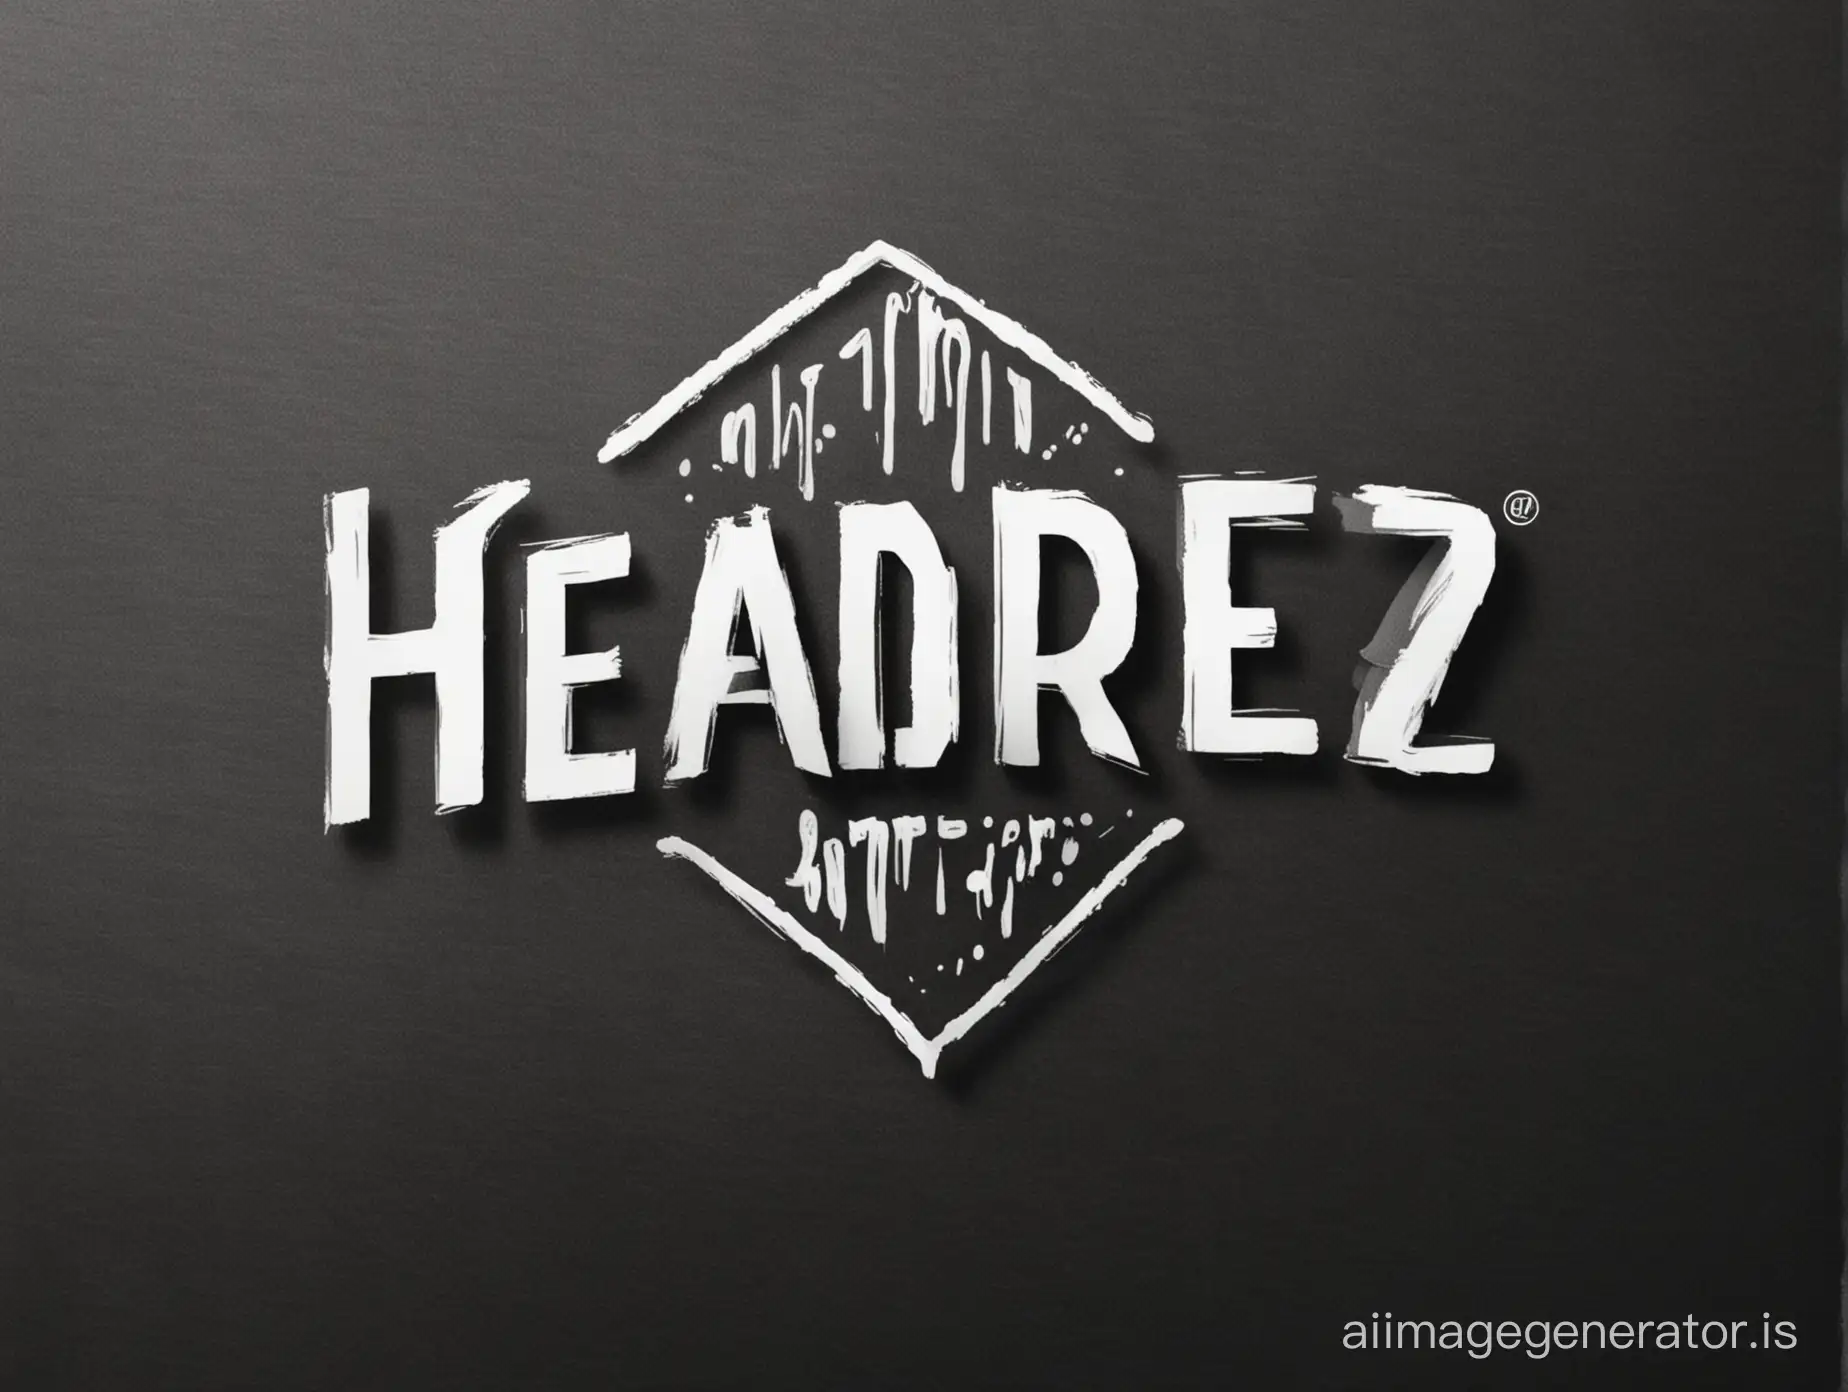 logo "HeadRez"